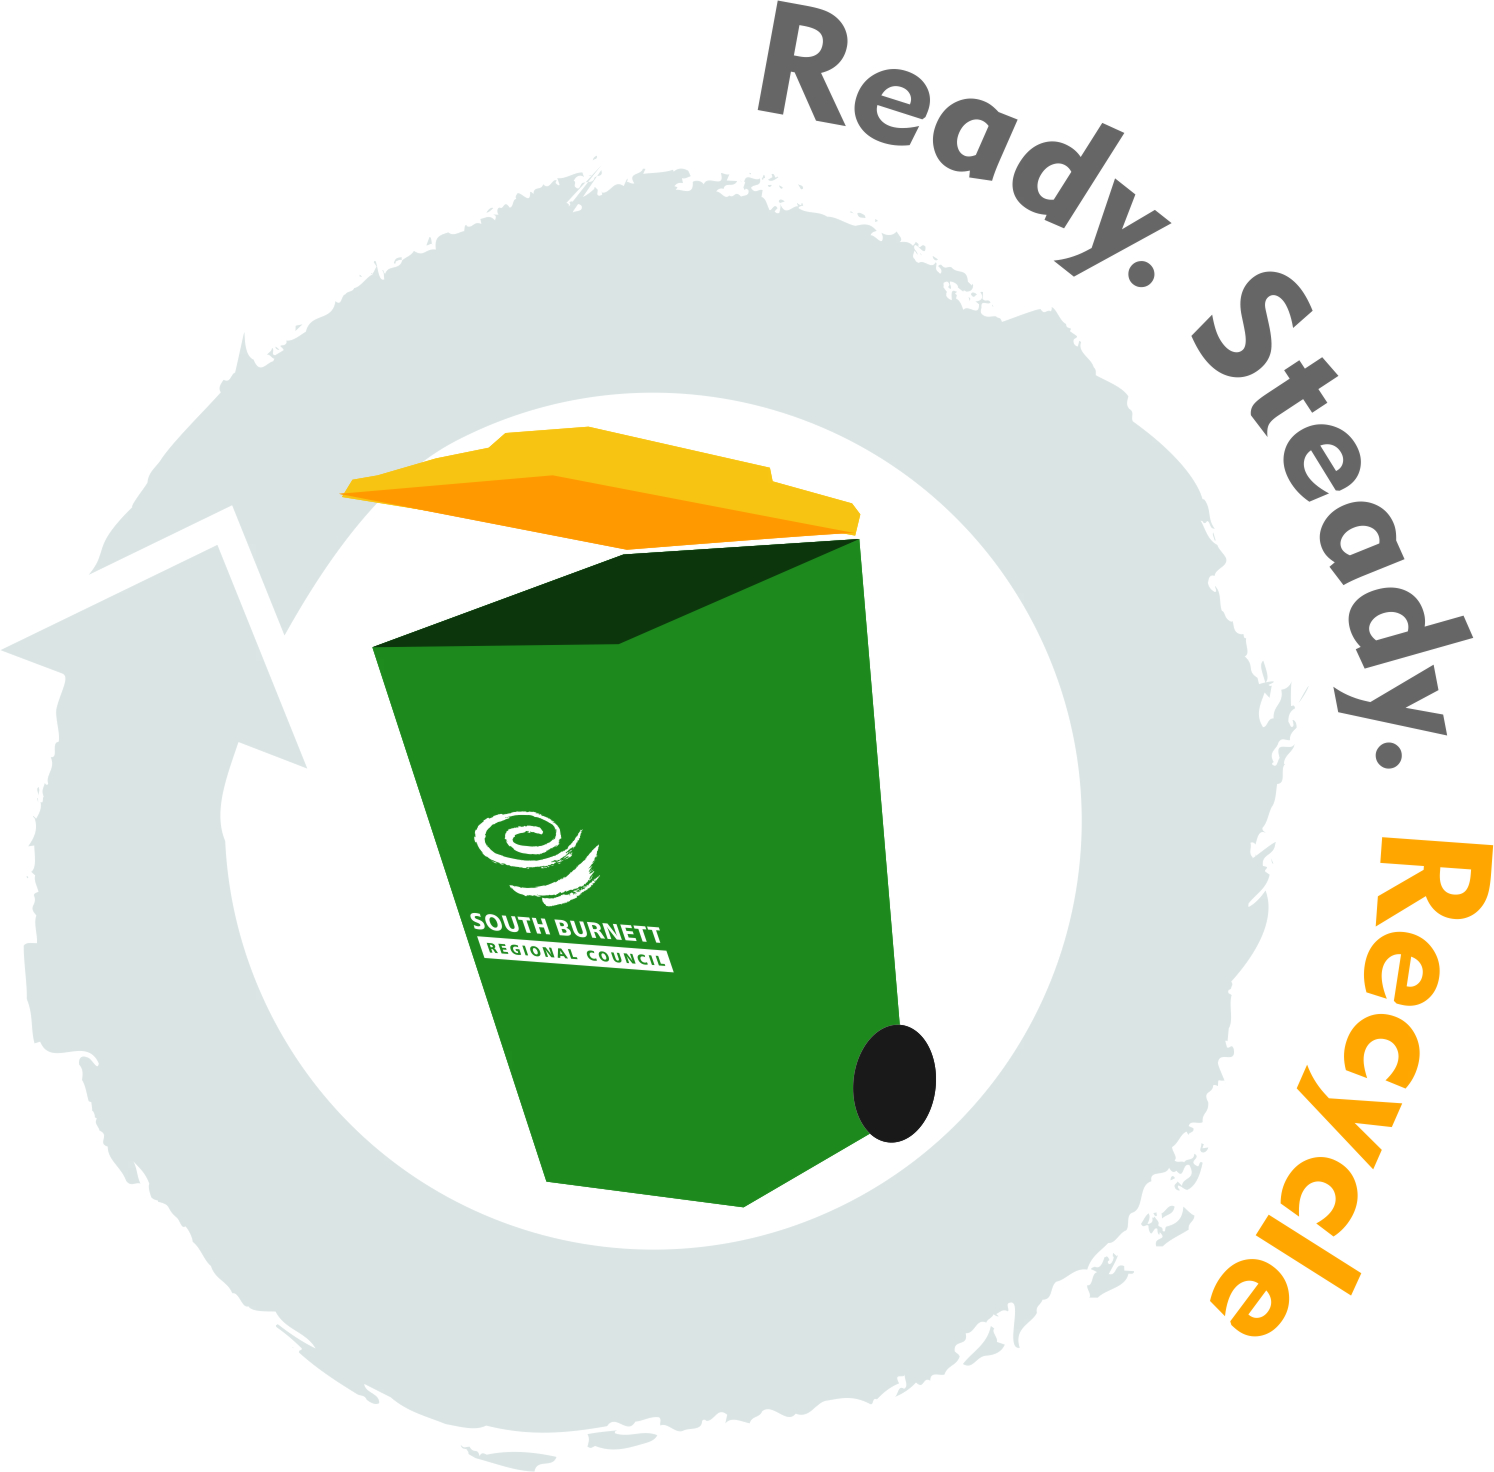 Sbrc logo recycle dec22